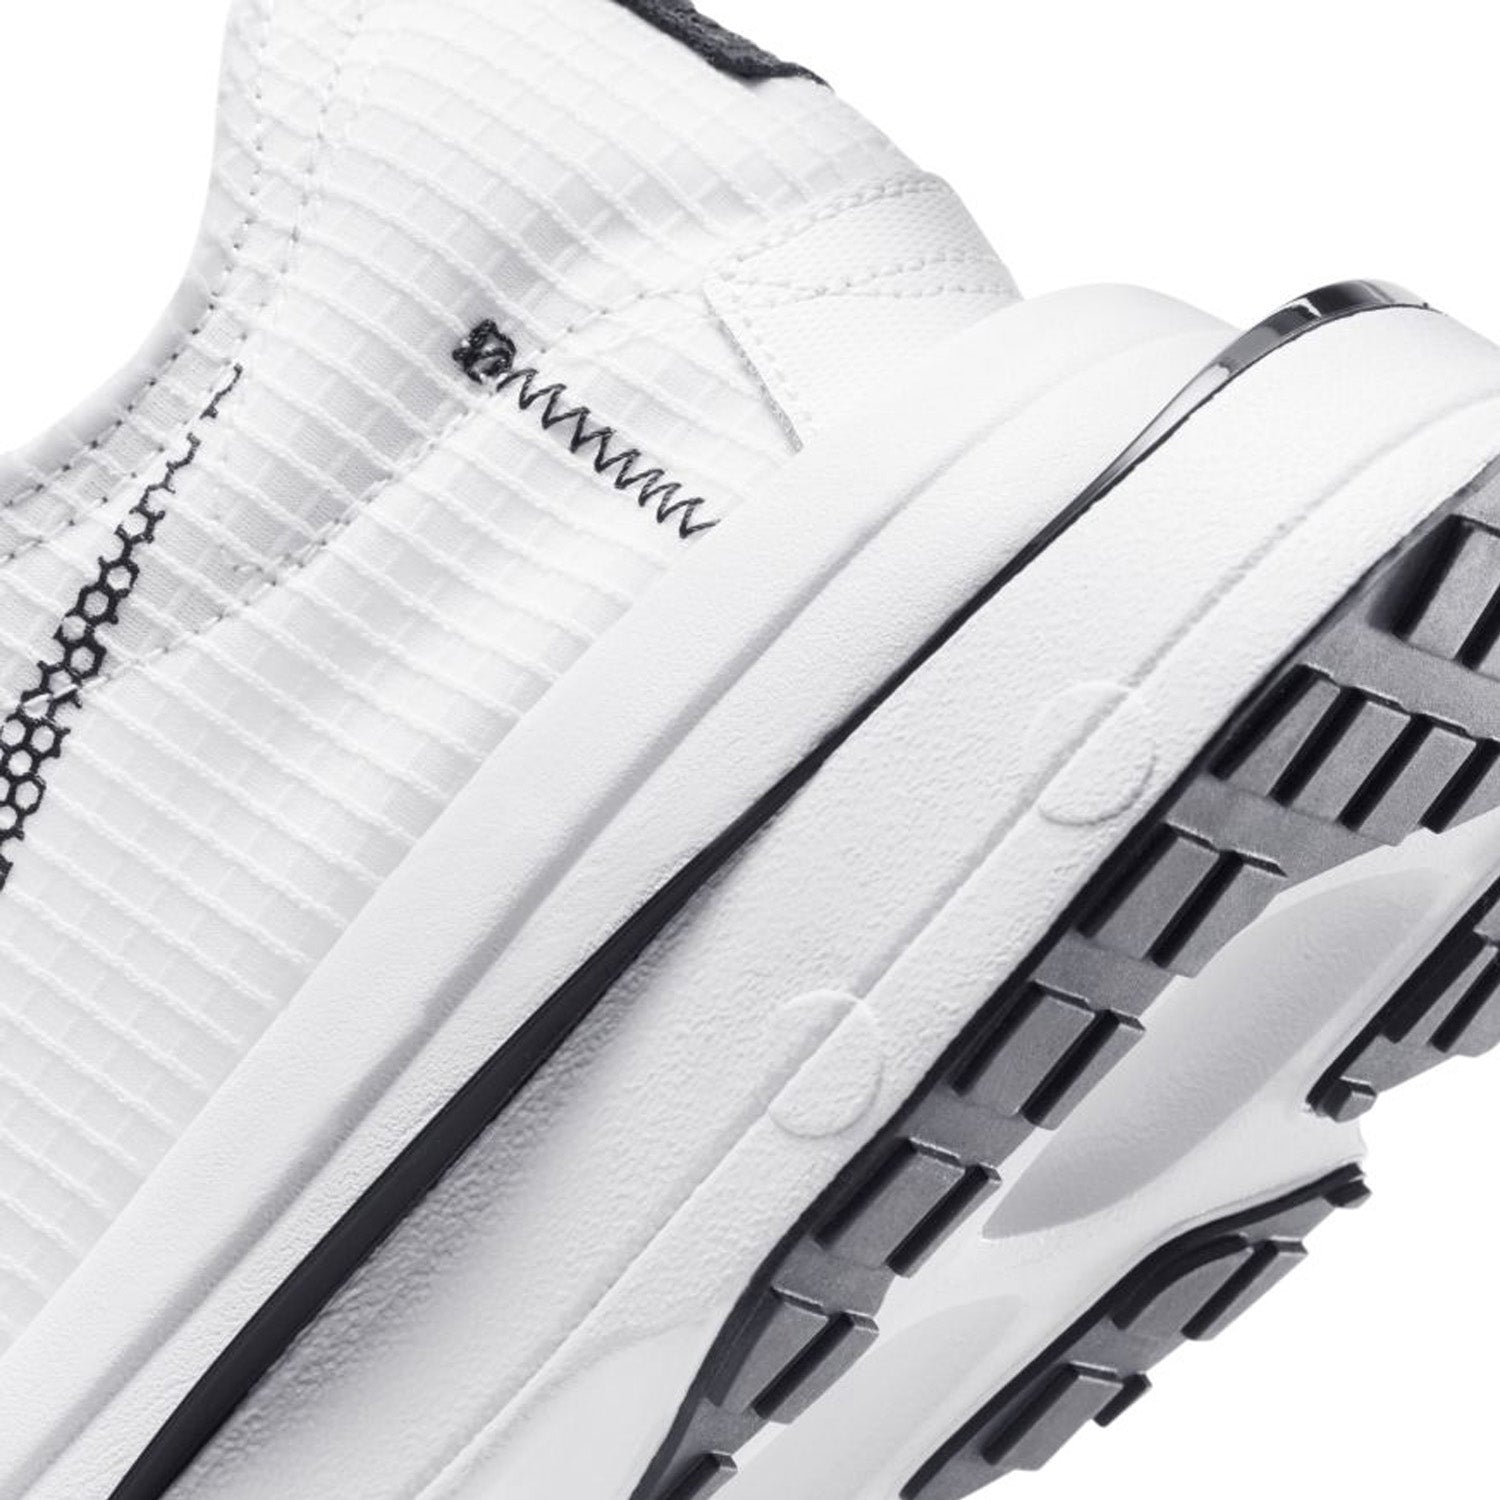 Nike Air Zoom-Type SE White/Black-White-Pure Platinum